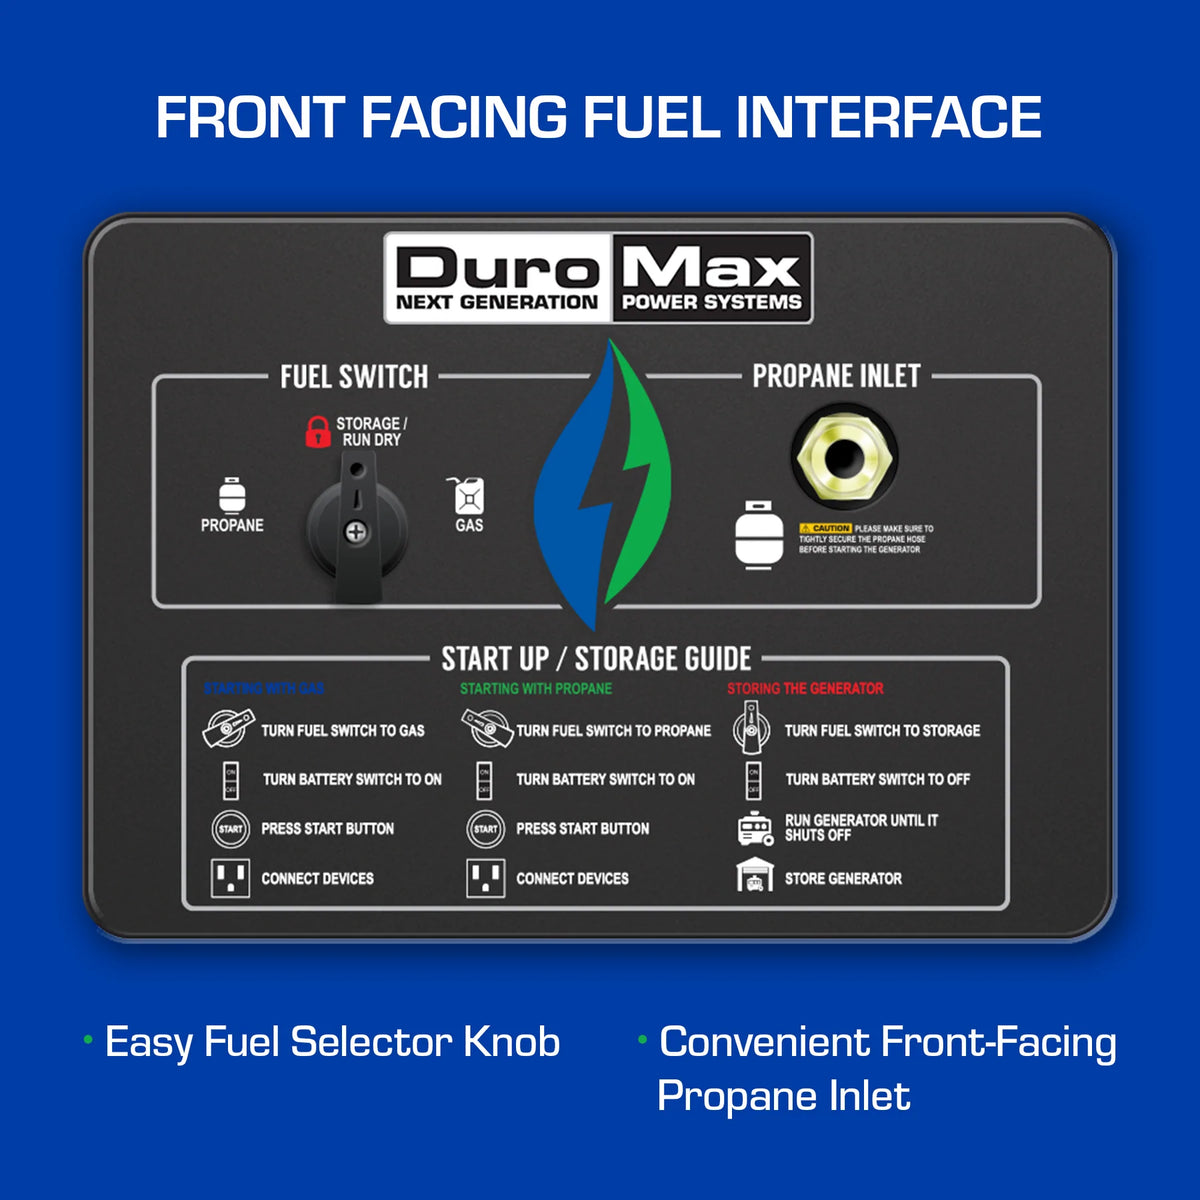 DuroMax XP13000E 13,000-Watt/10,500-Watt 500cc Electric Start Gas Powered Portable Generator